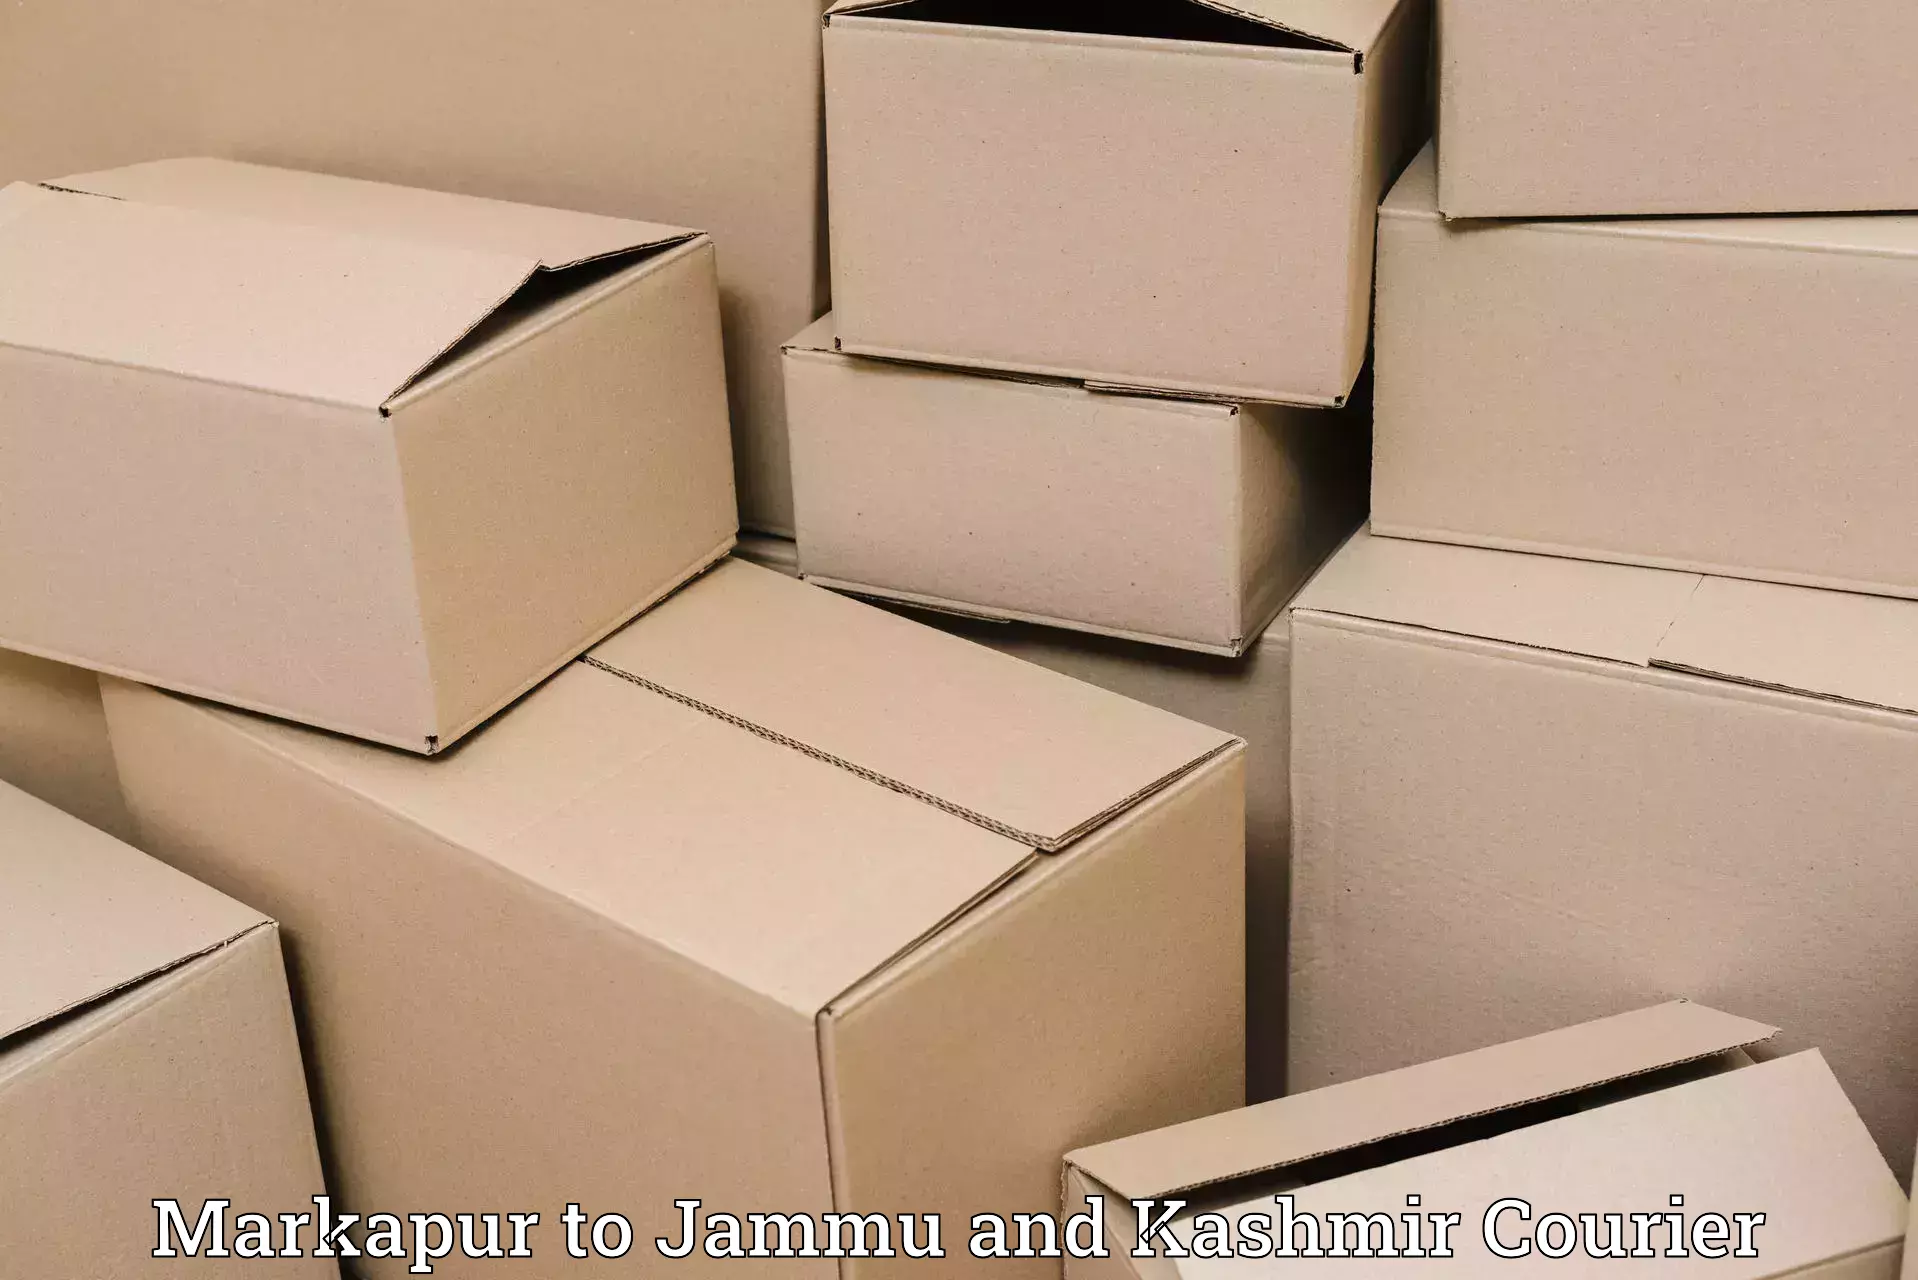 Advanced shipping technology Markapur to Jakh